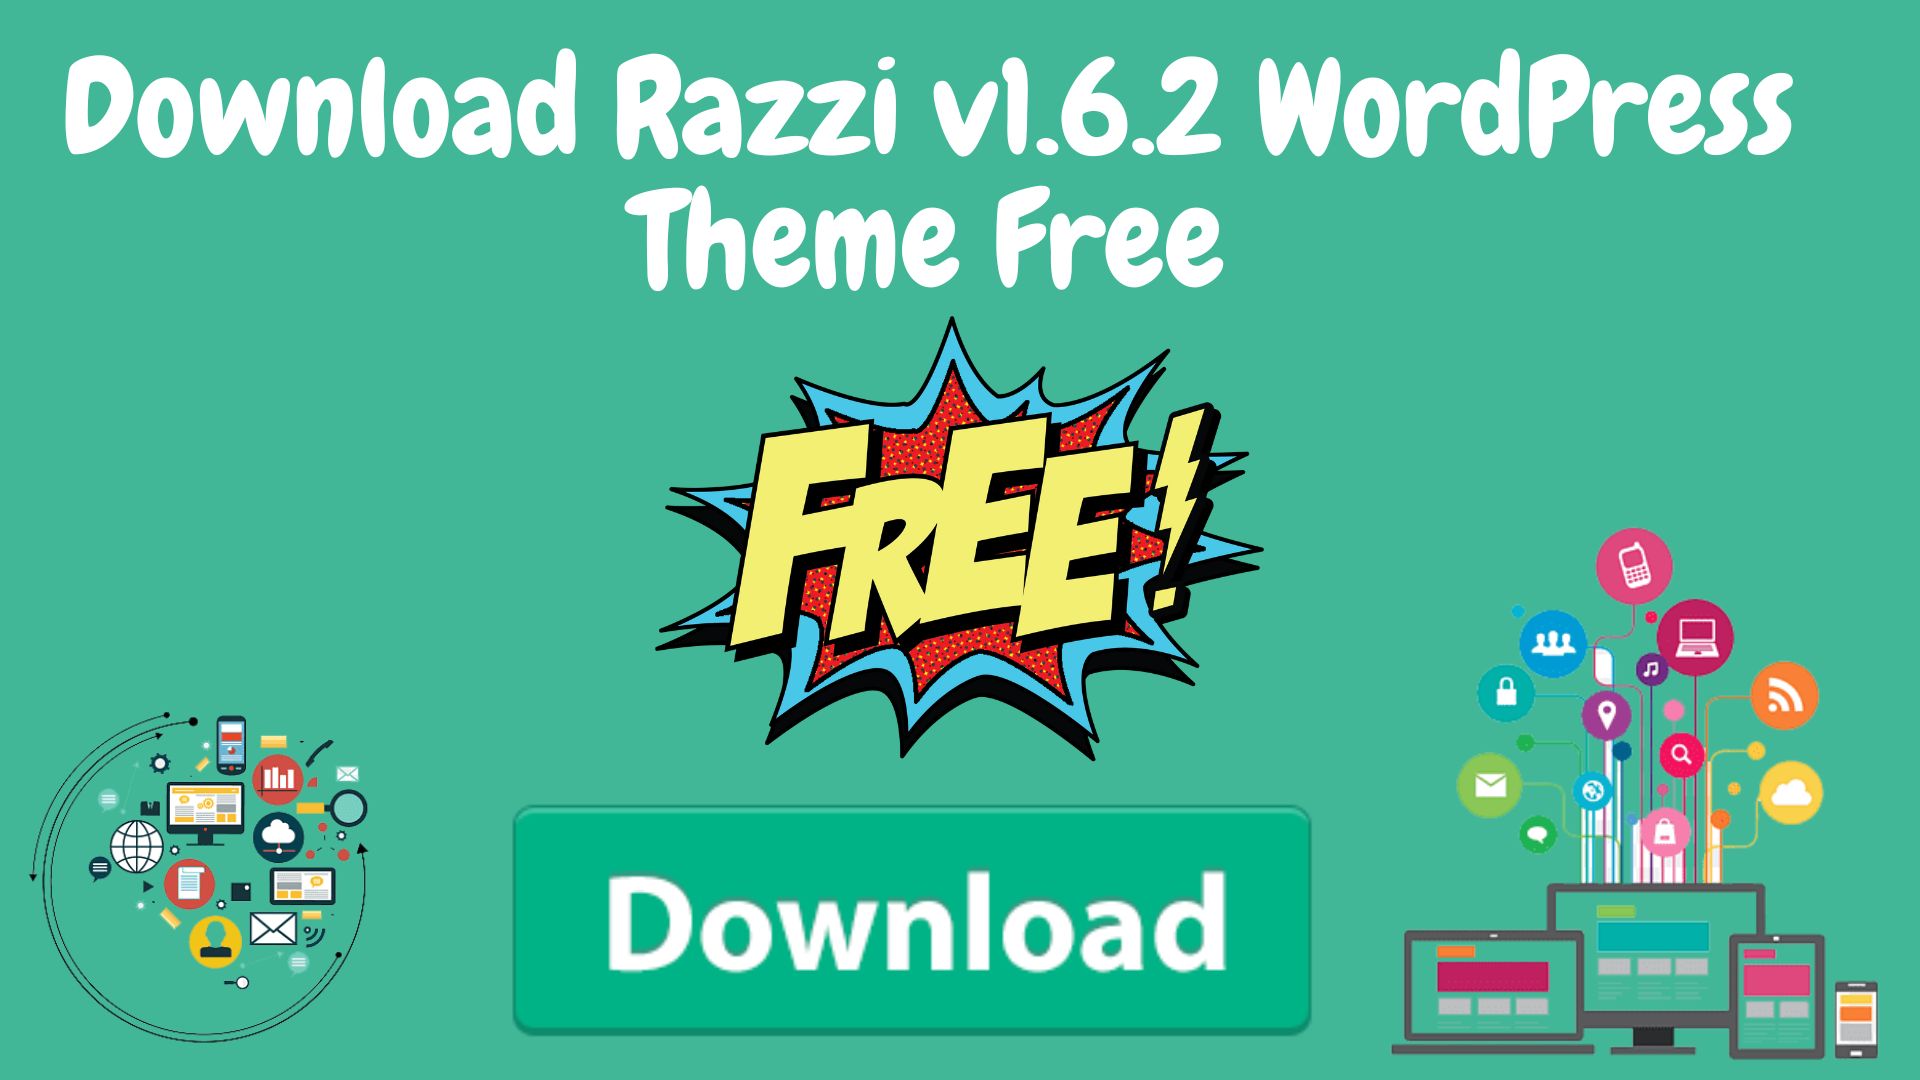 Download razzi v1. 6. 2 wordpress theme free